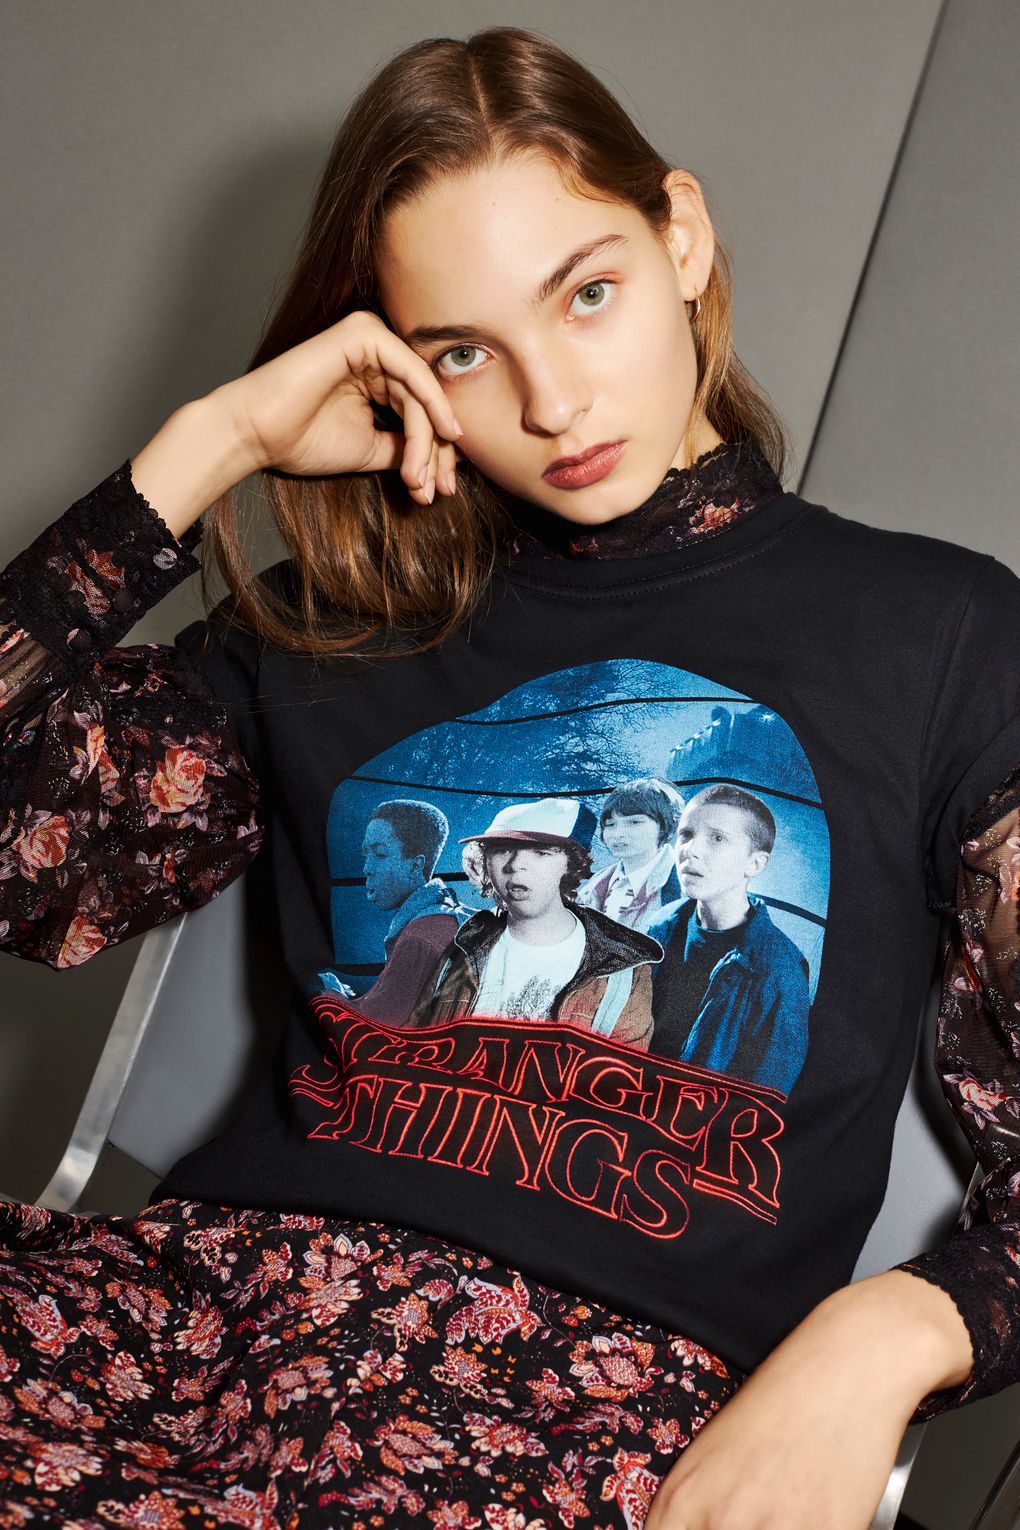 Top Shop lanza colección de ropa vintage inspirada en Stranger Things